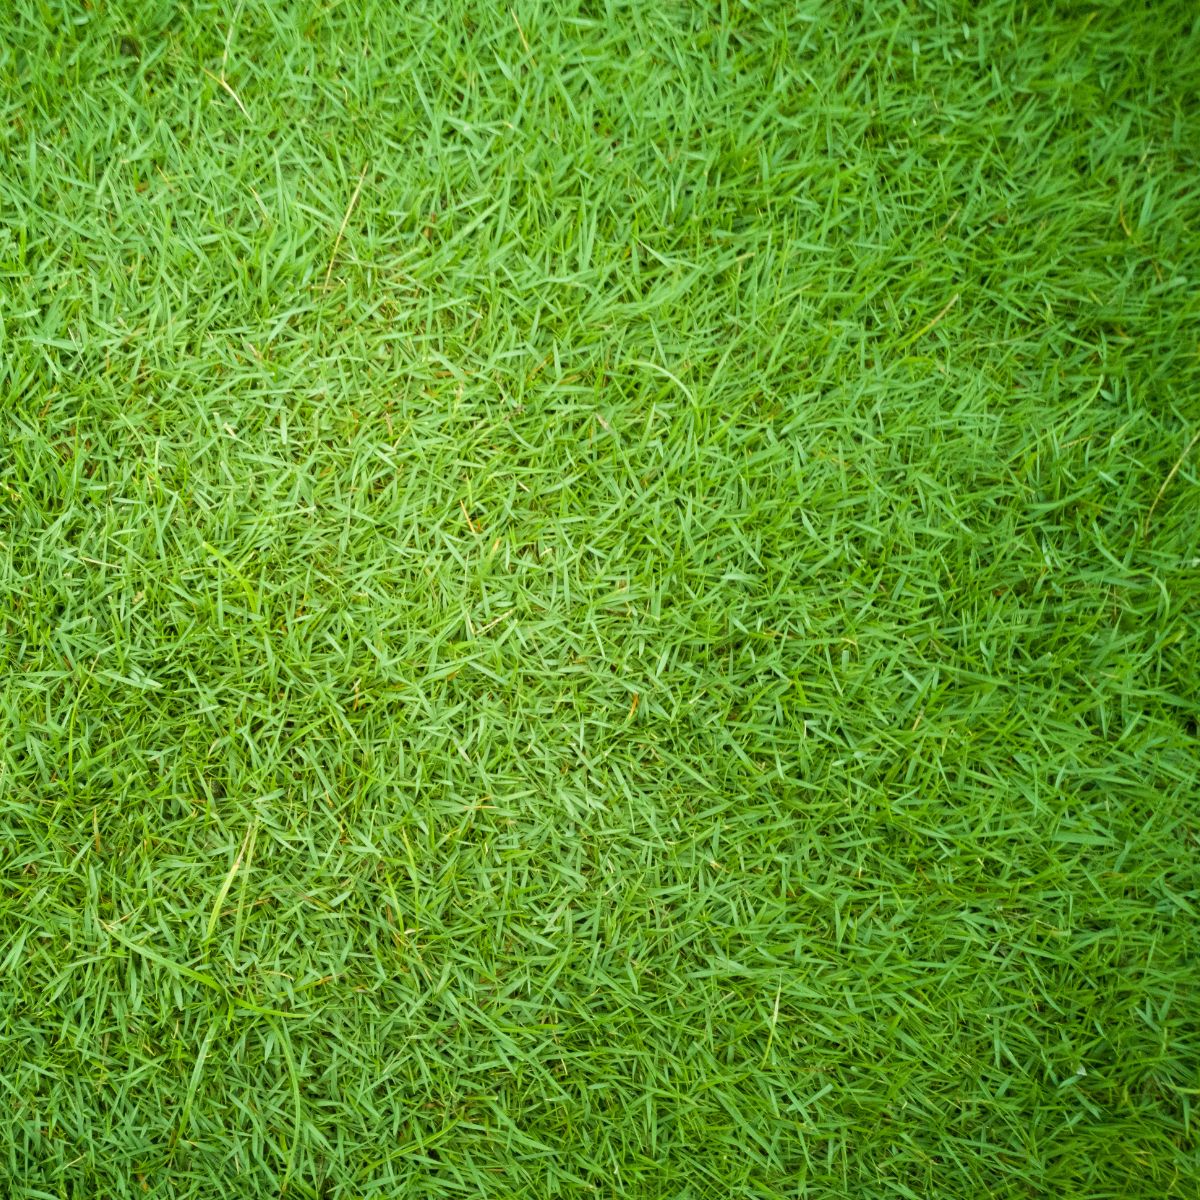 Bermuda grass.